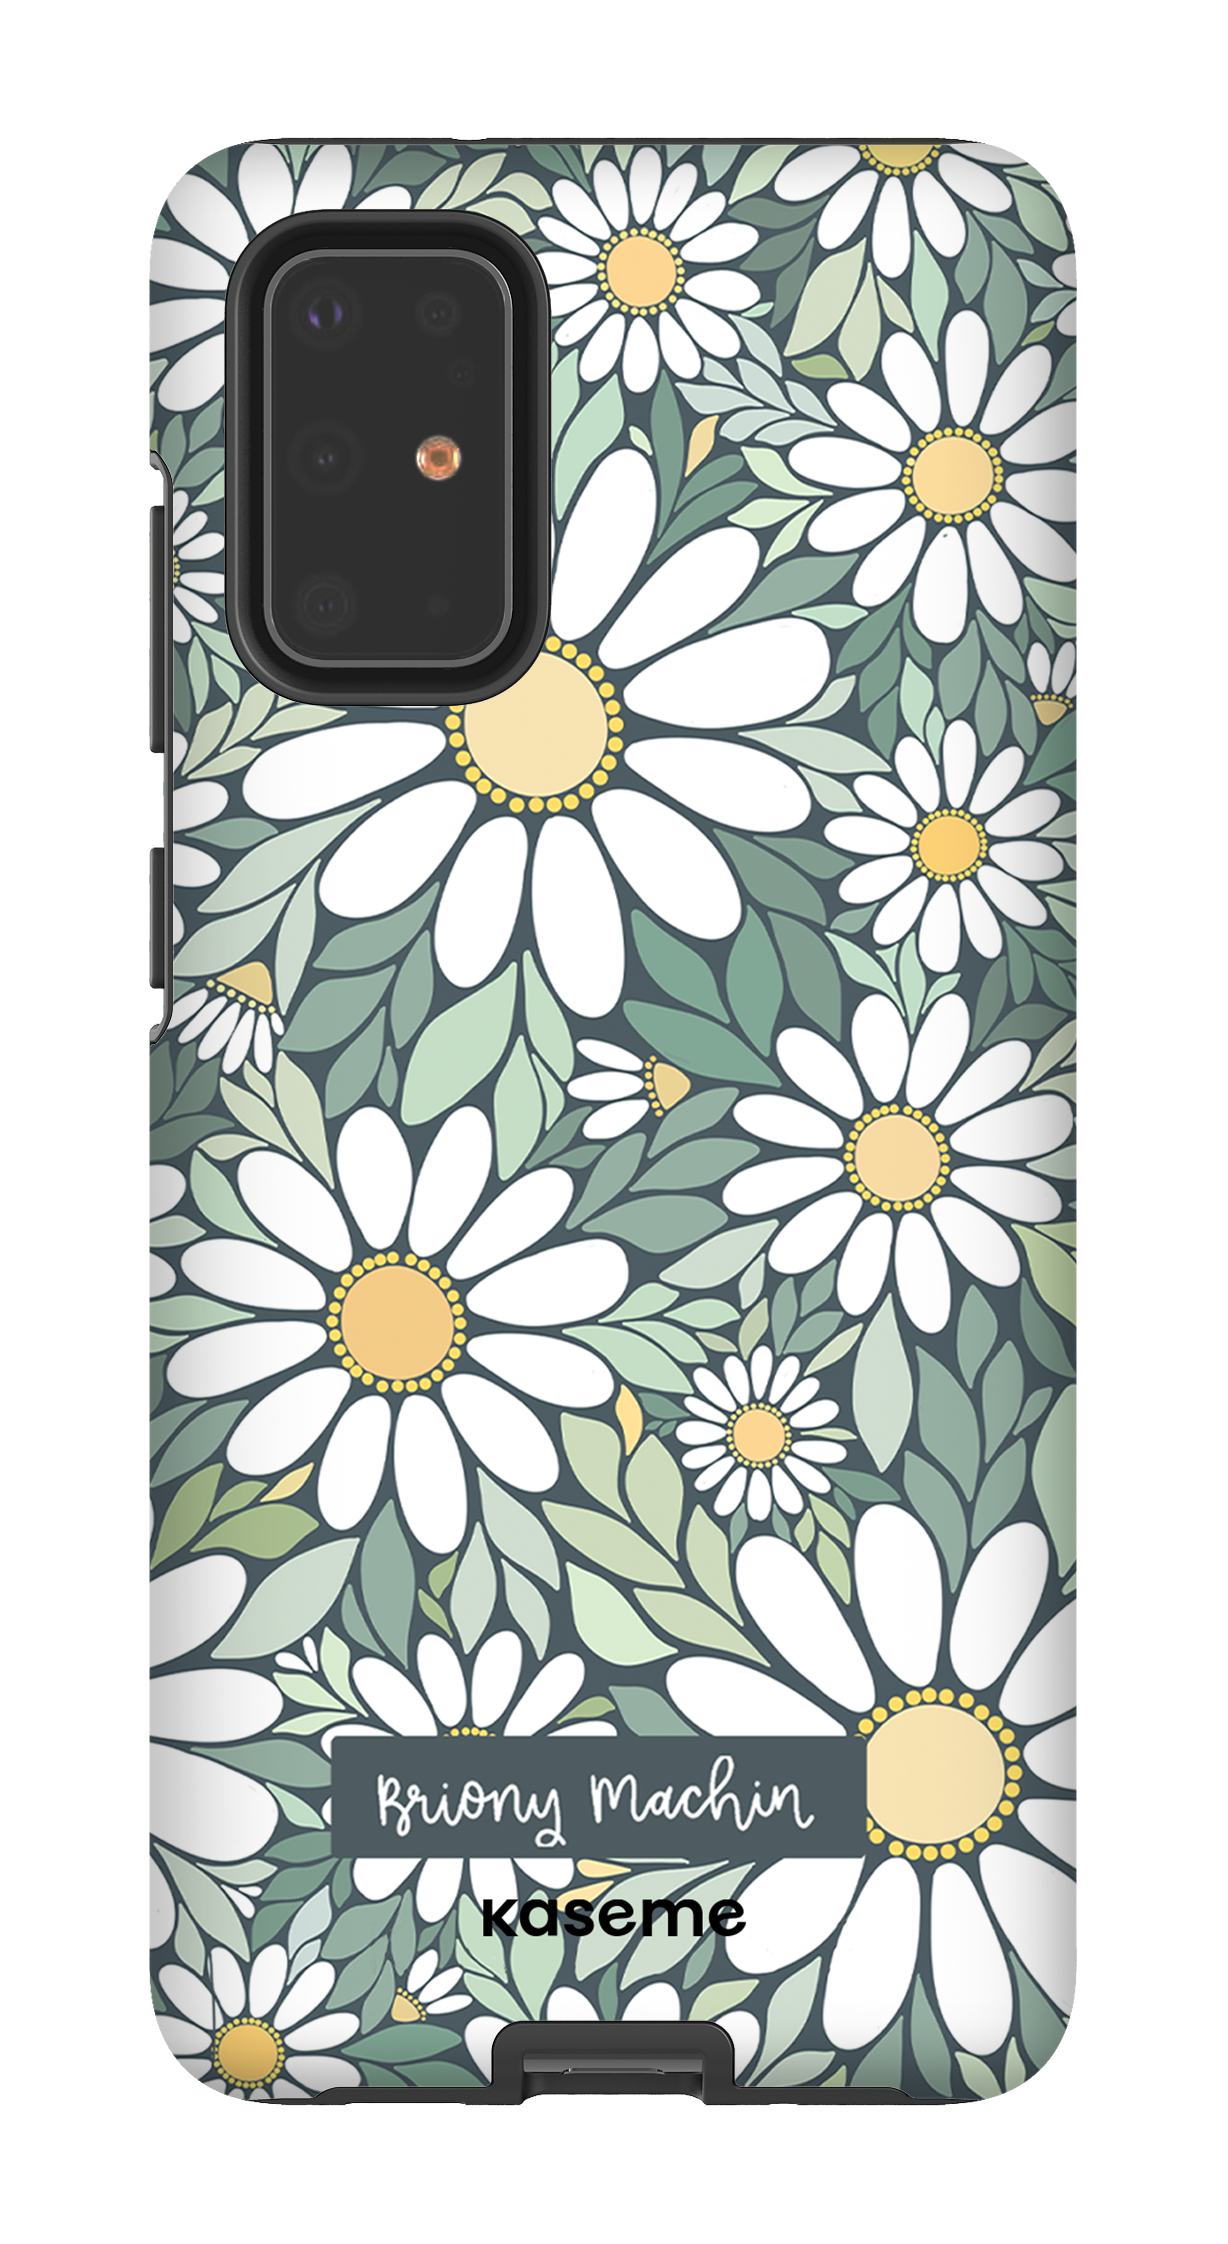 Daisy Blooms by Briony Machin - Galaxy S20 Plus